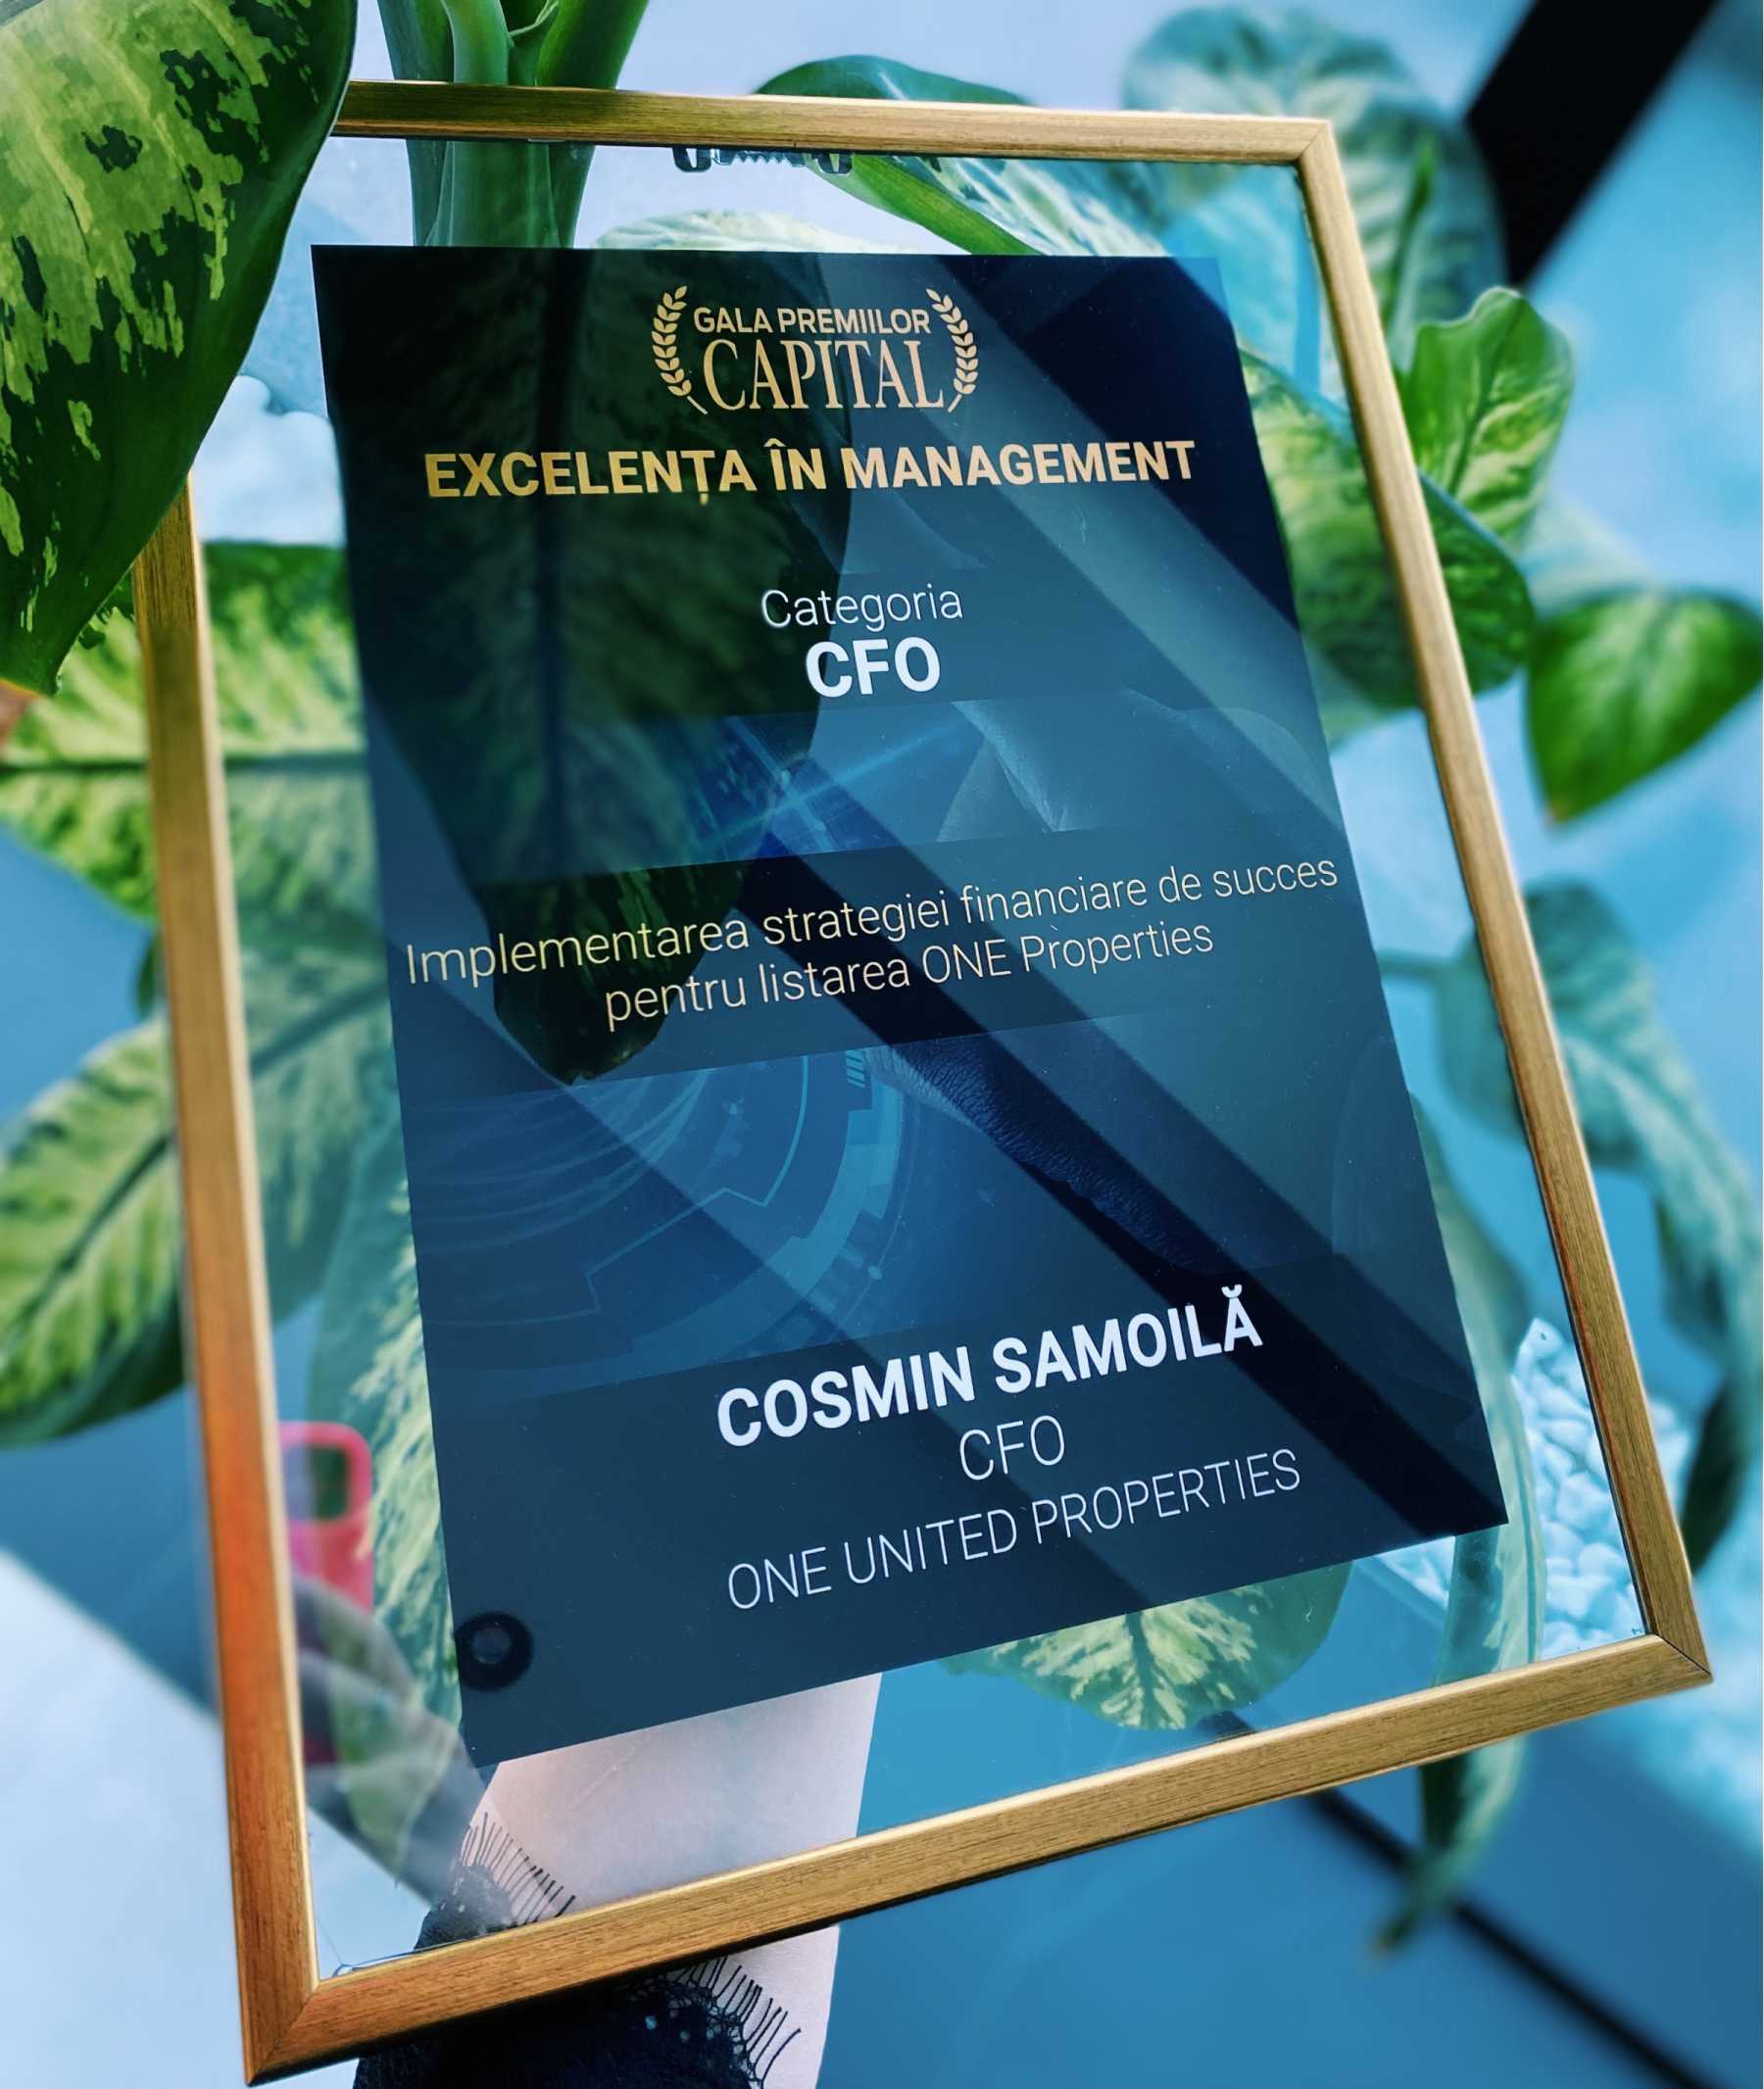 Cosmin Samoilă, CFO One United Properties, awarded for excellence in management at Gala Capital